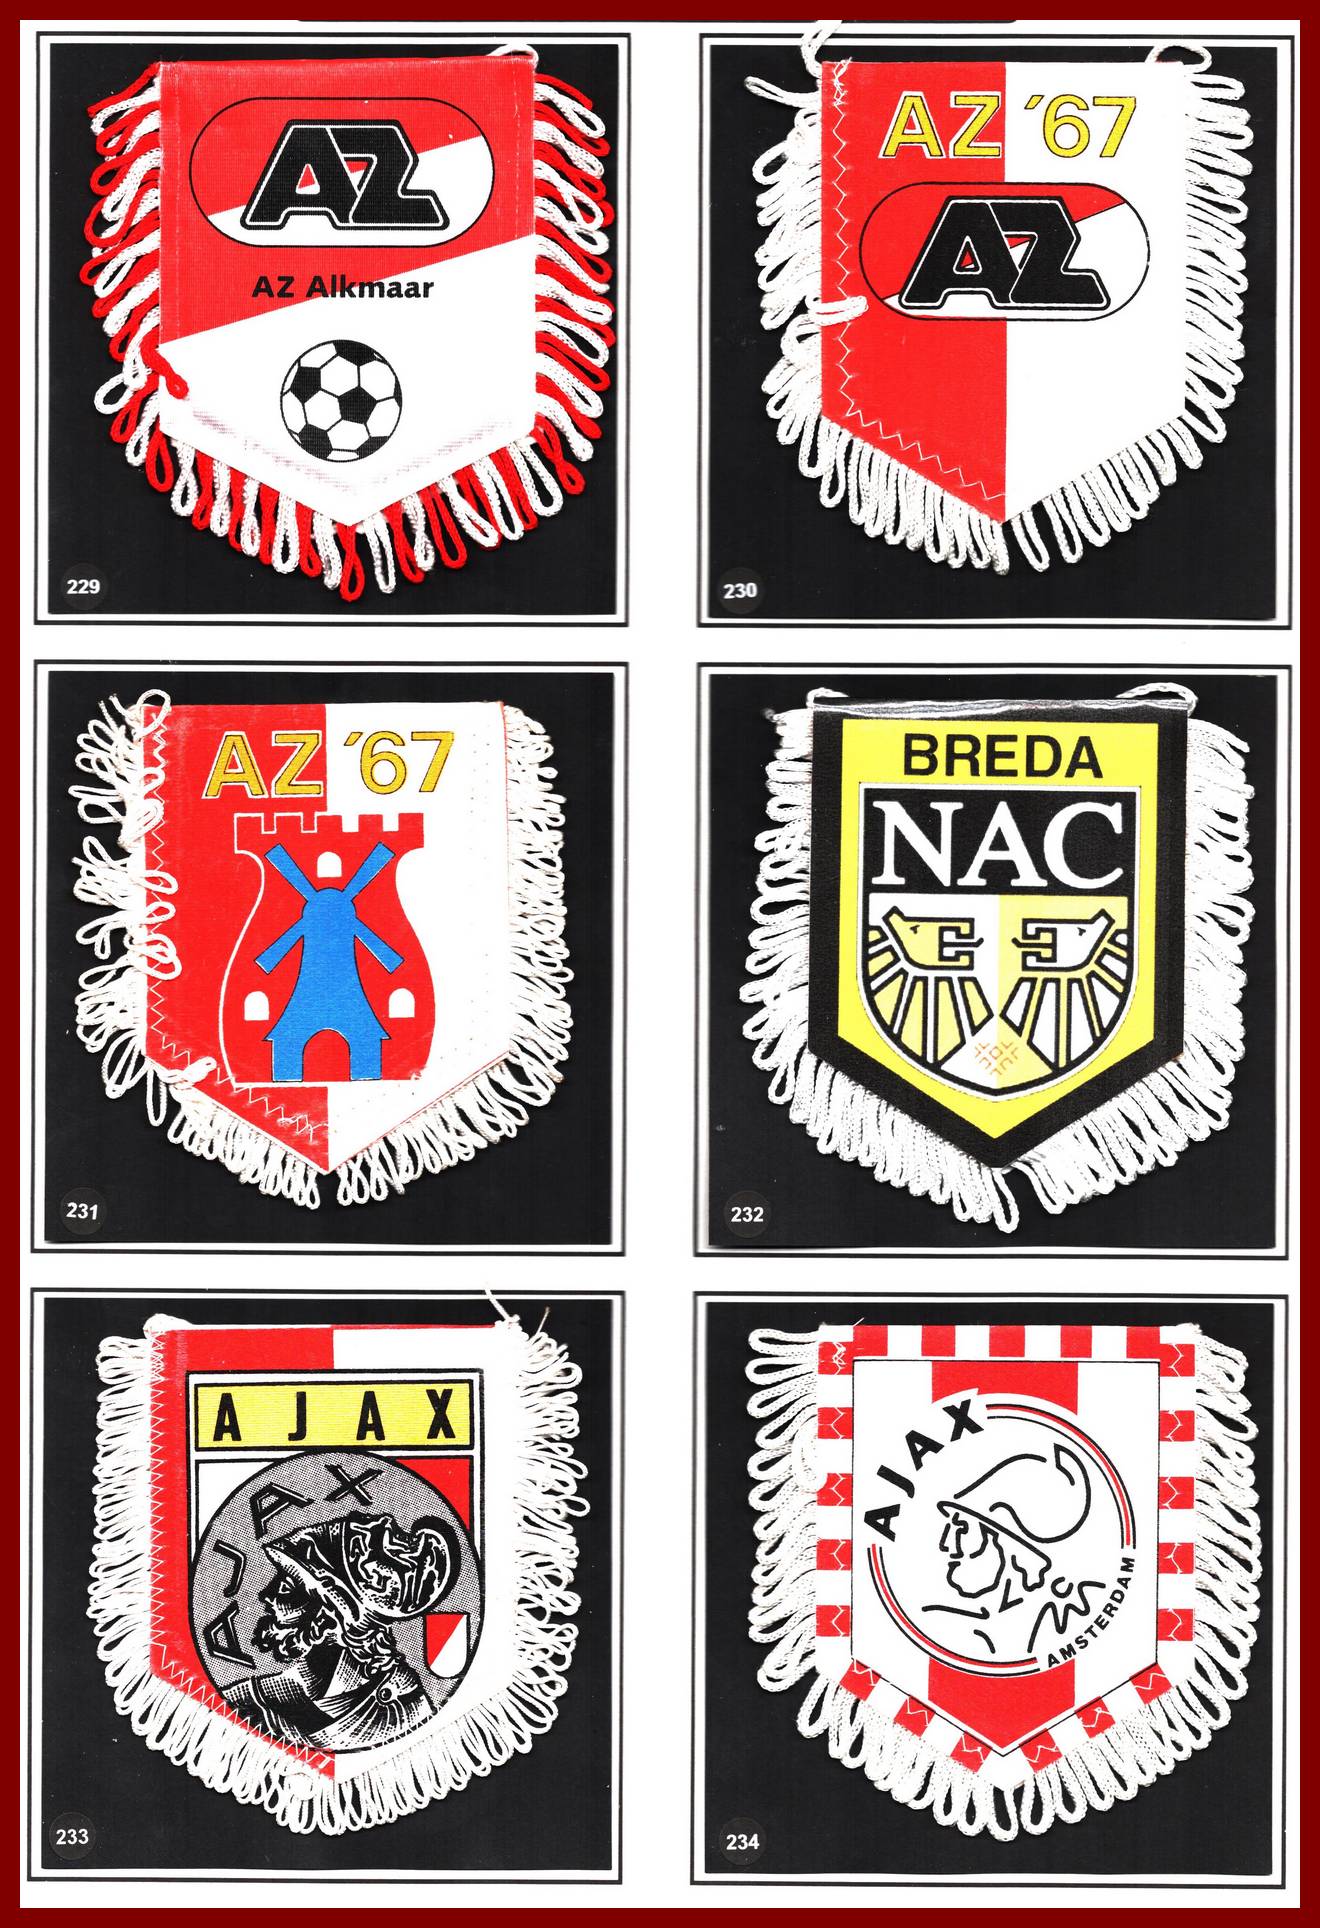 Photo 429 PAYS-BAS (Page 01): AZ Alkmaar - AZ'67 - Breda NAC - Ajax Amsterdam